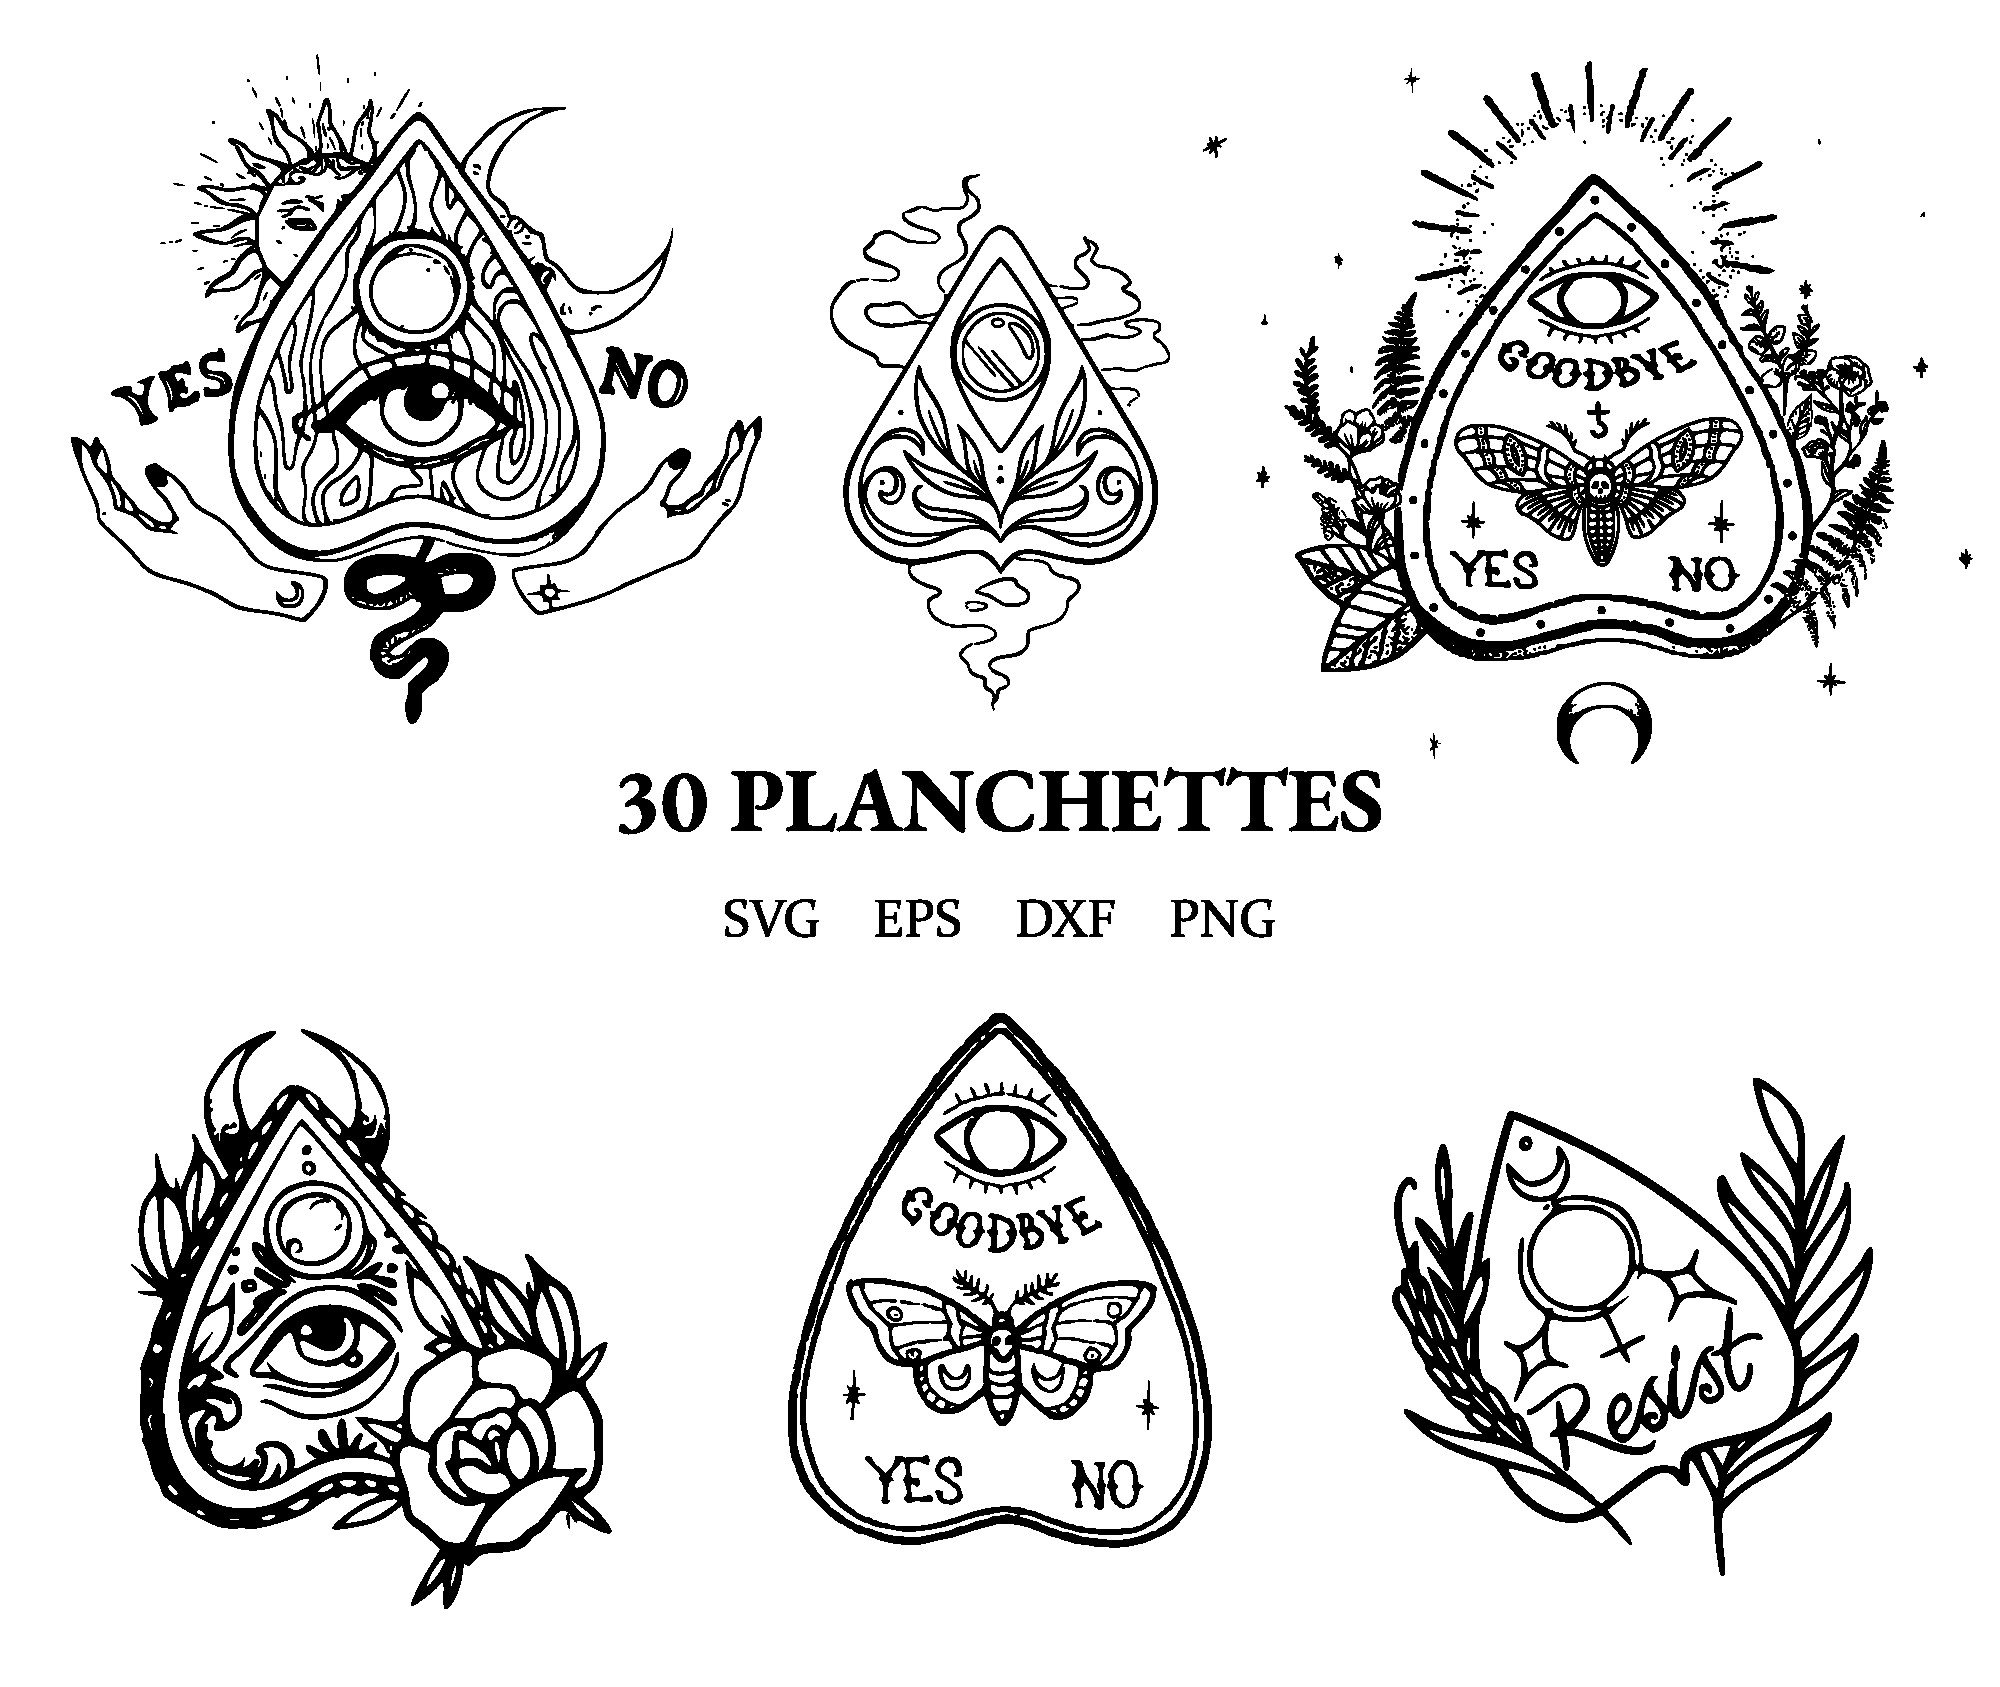 Planchette Cricut Board Evil Eye Svg, Png, Jpeg, Dxf Cut Files for Plotting  Cutting Machines Cricut Silhouette Printable Stickers 